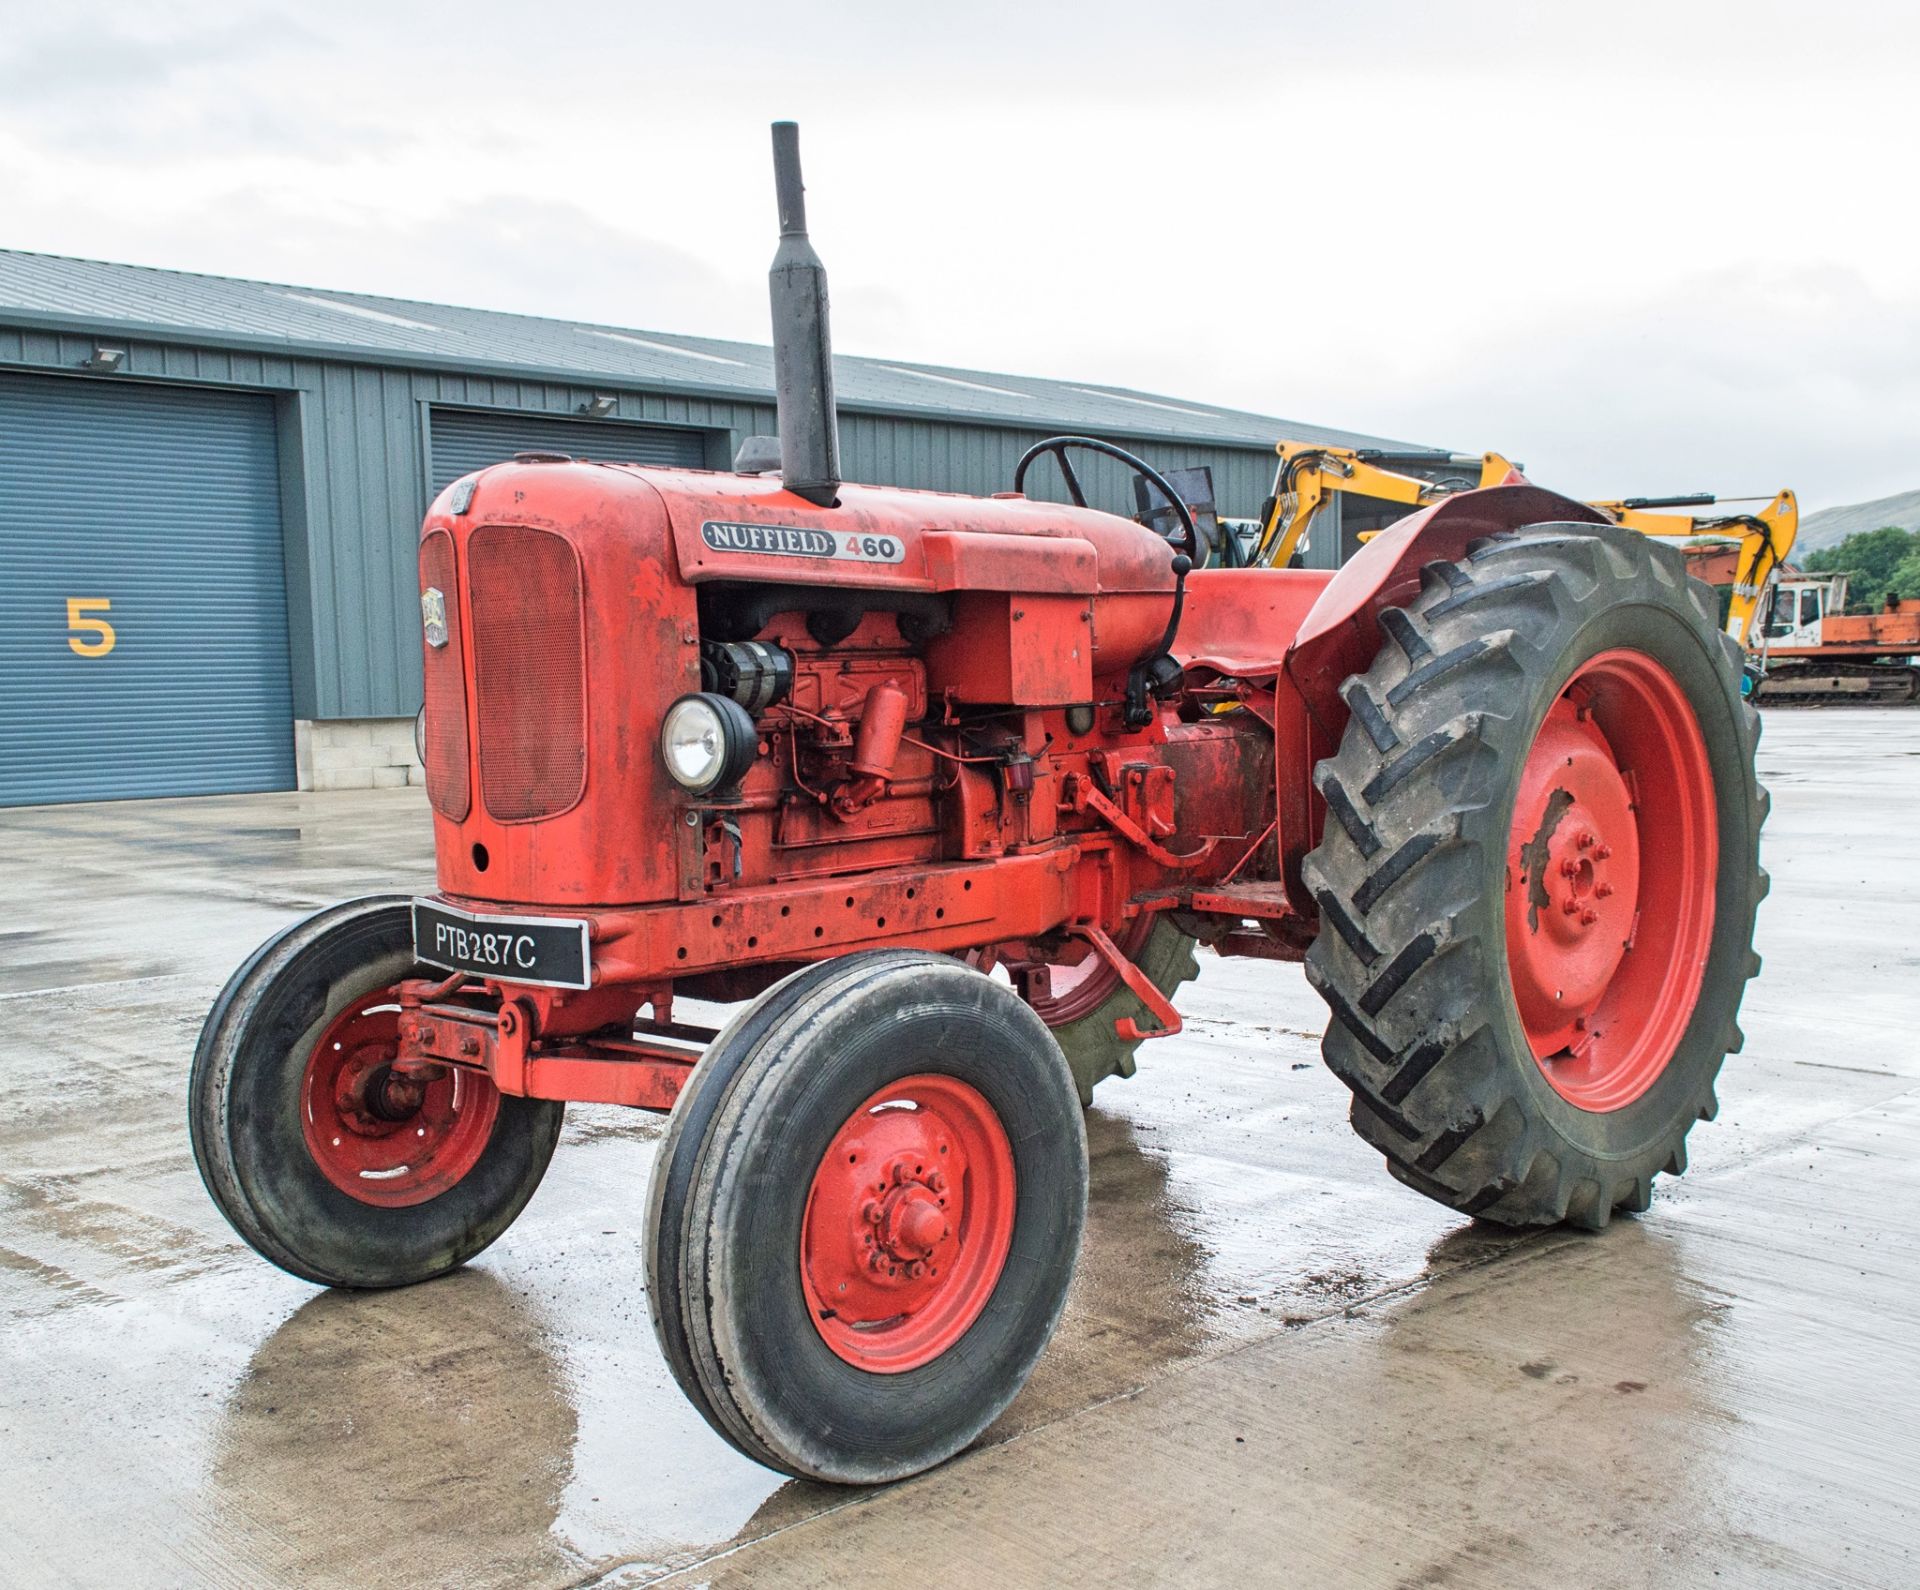 Nuffield 460 2 wheel drive diesel driven tractor  Reg Number: PTB 287C  S/N: 60B 1500 57042